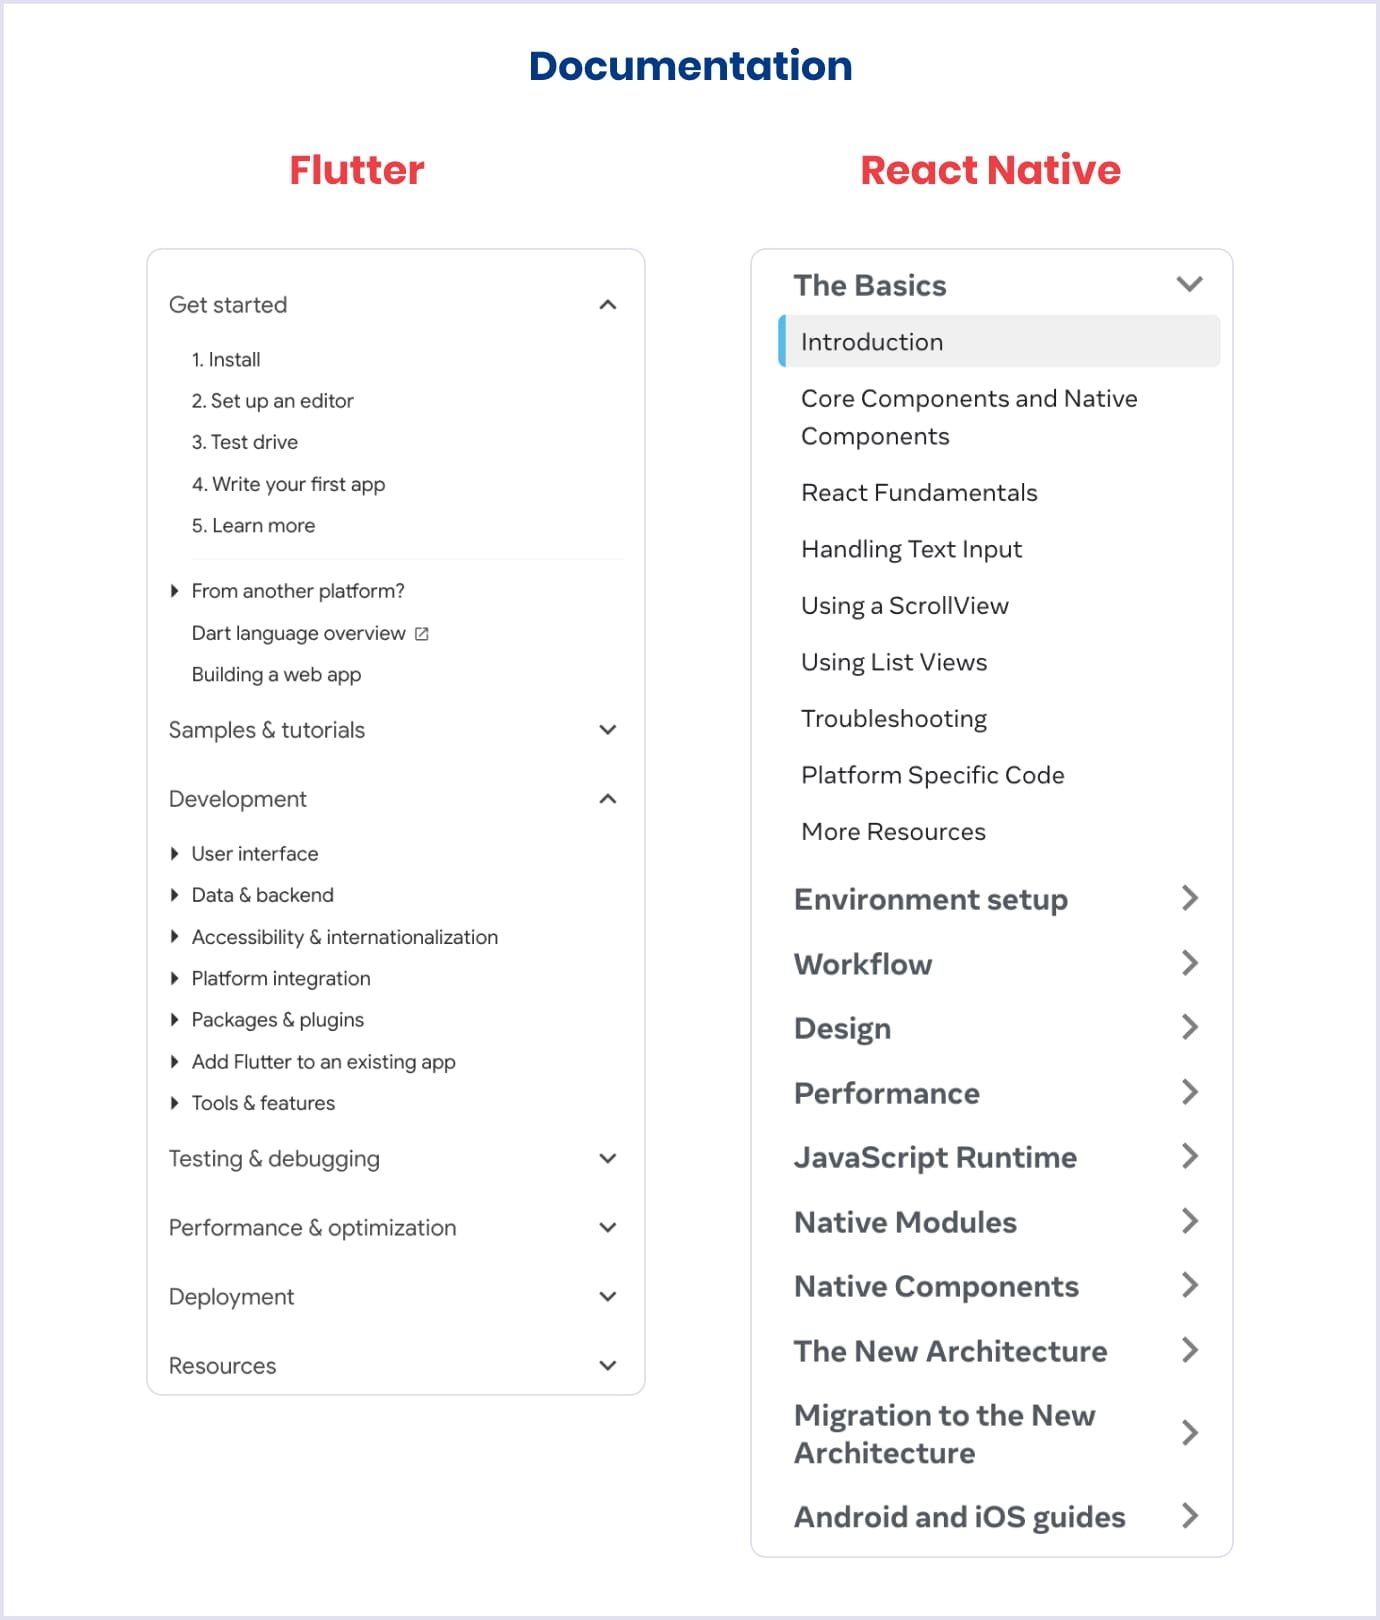 Flutter vs React native documentation structure